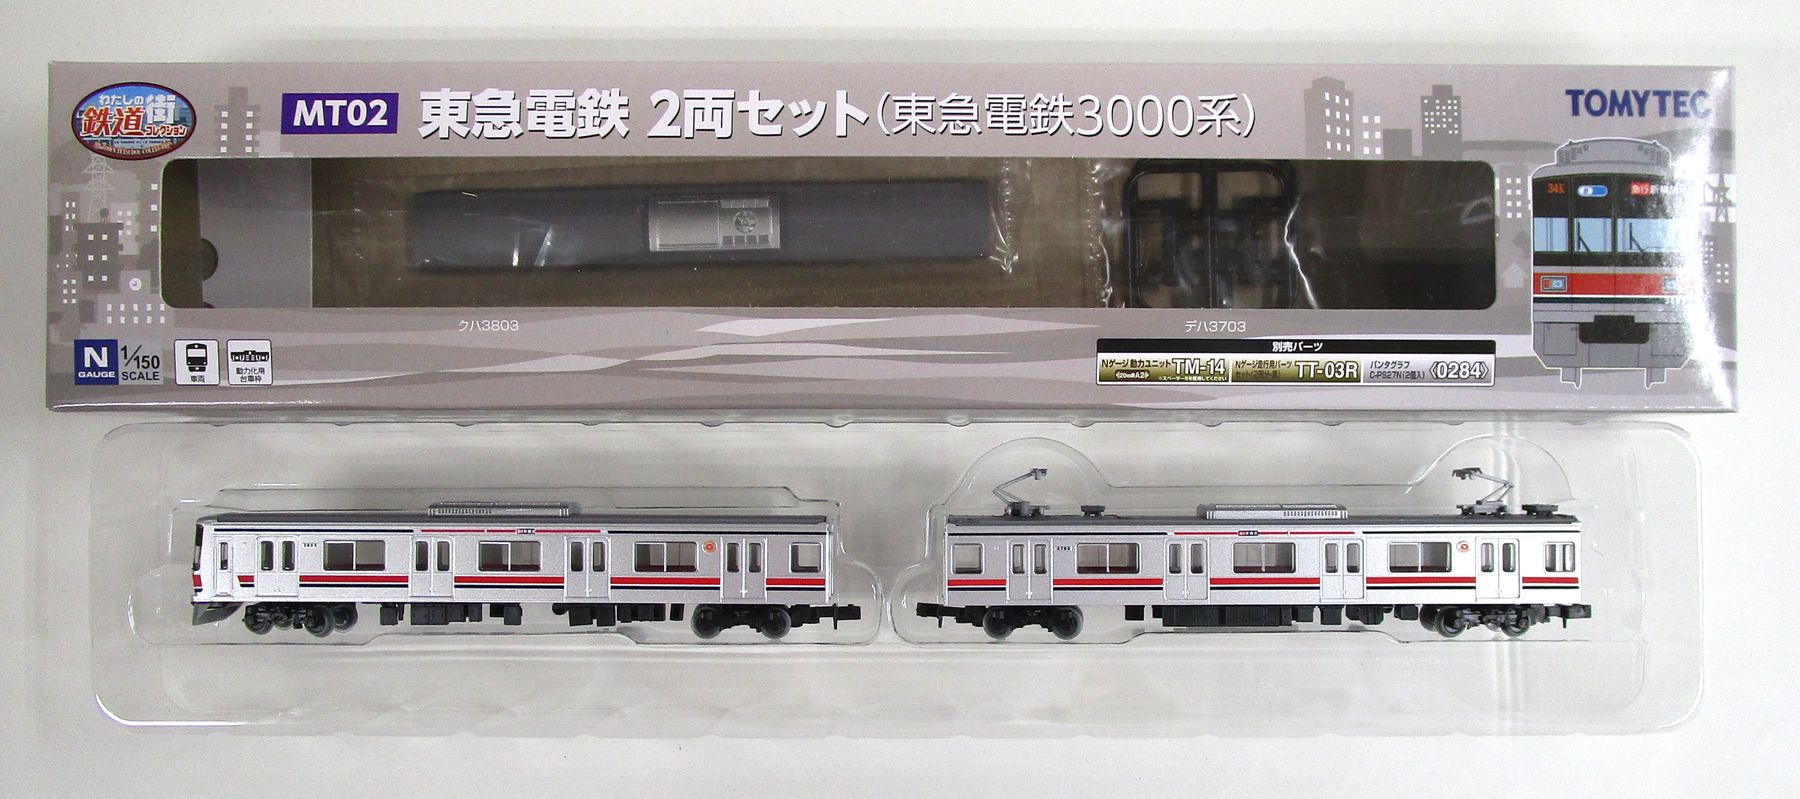 MT02甲-MT02乙 東急電鉄3000系